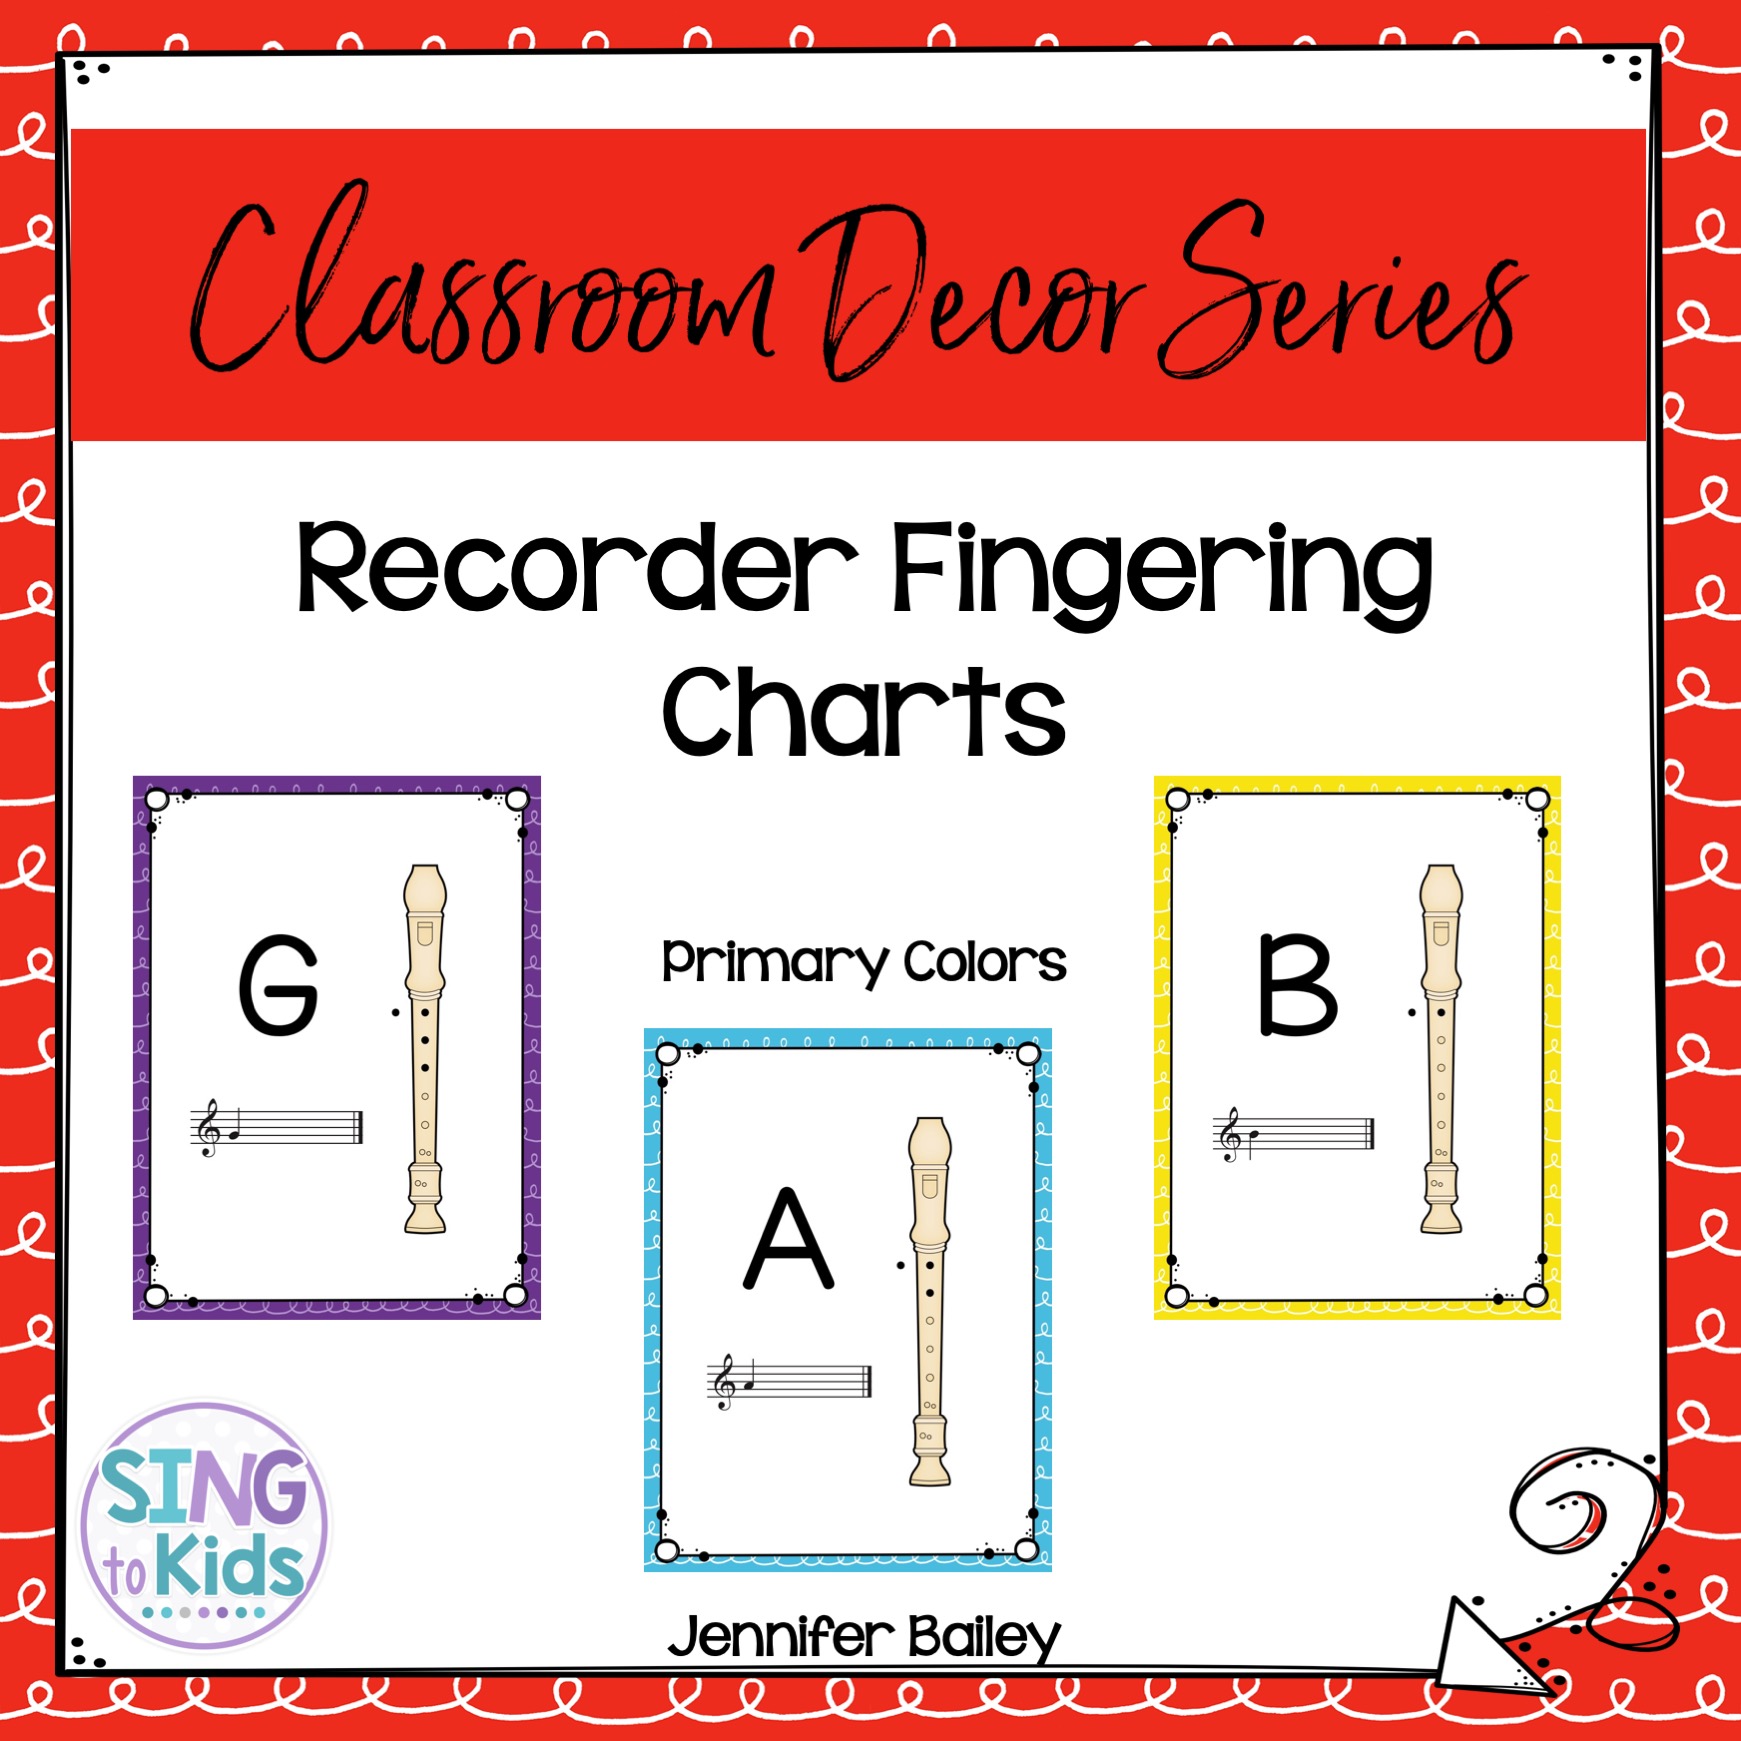 Recorder Fingering Charts Primary Colors SingtoKids